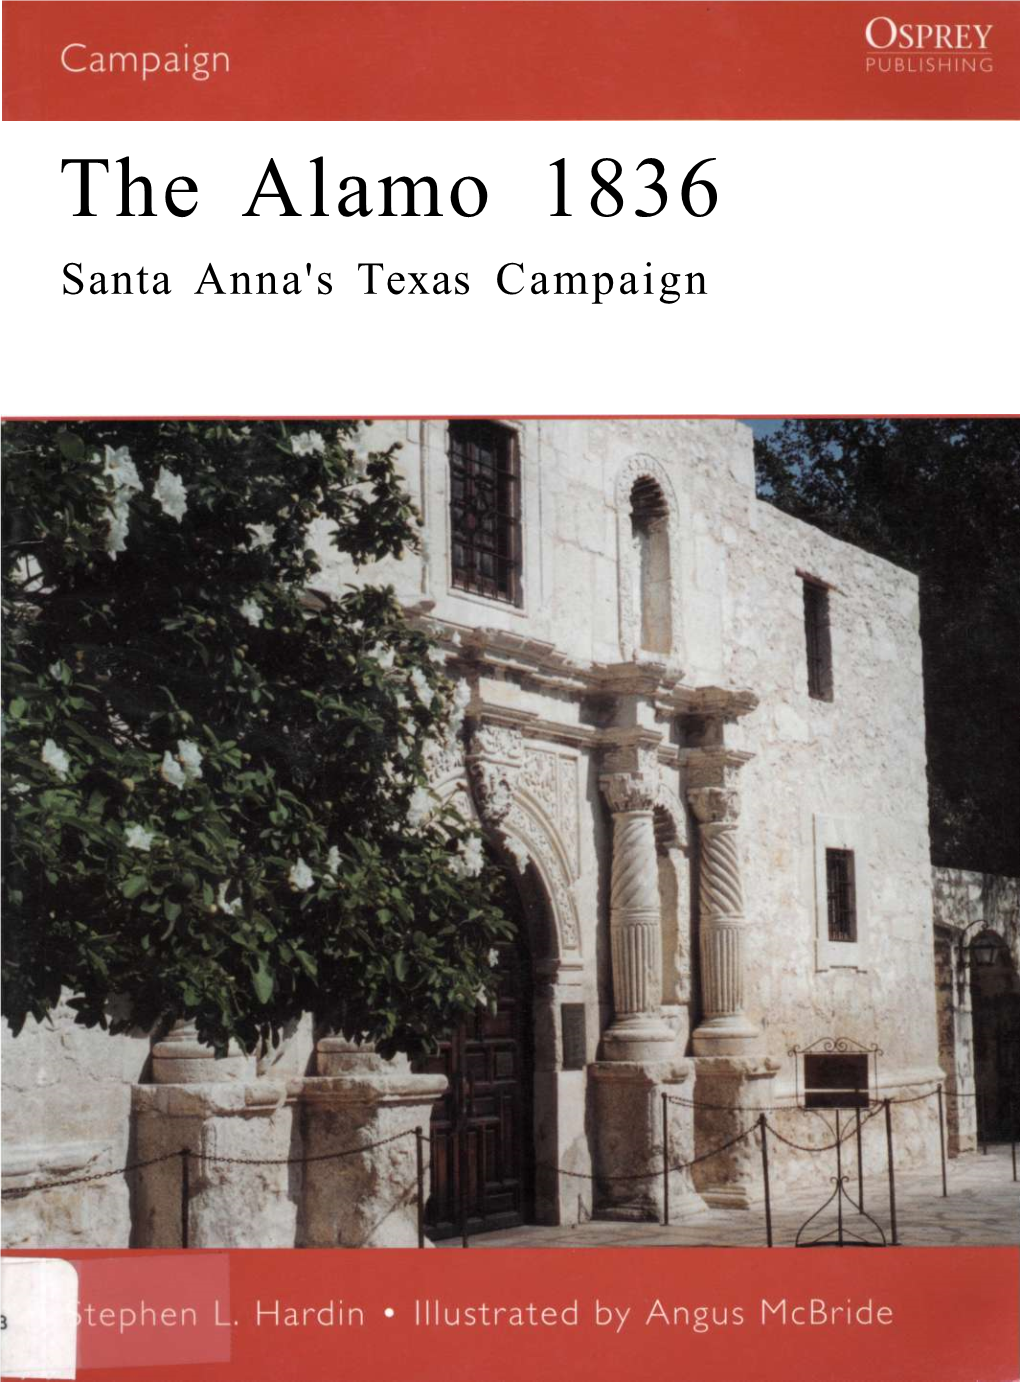 The Alamo 1836 Santa Anna's Texas Campaign STEPHEN L